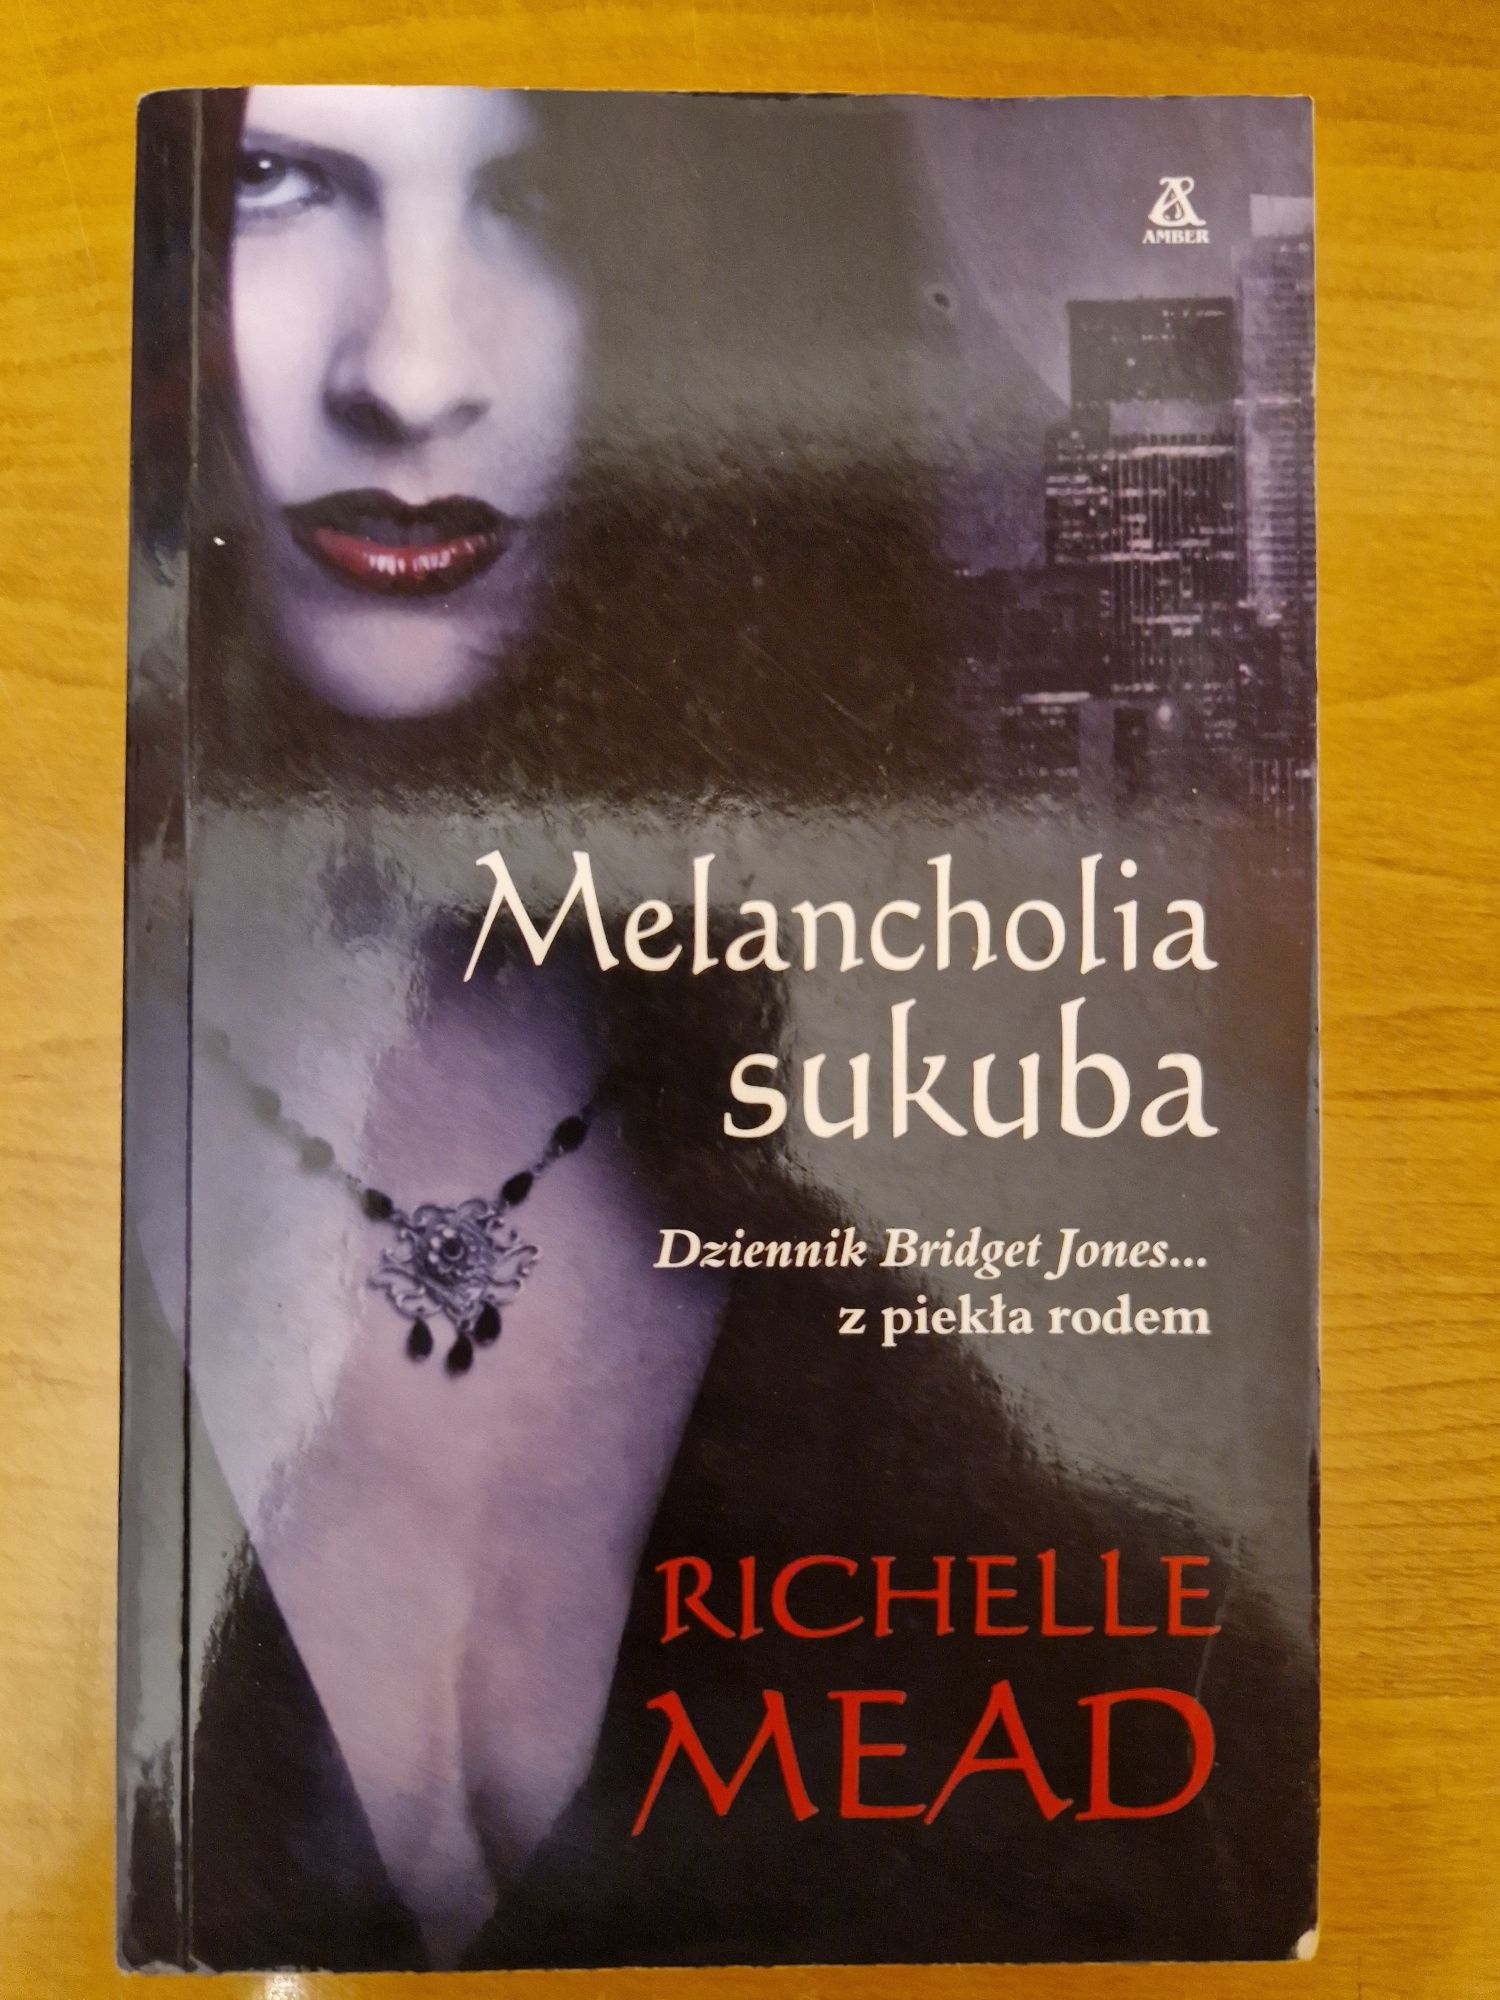 "Melancholia sukuba" Richelle Mead